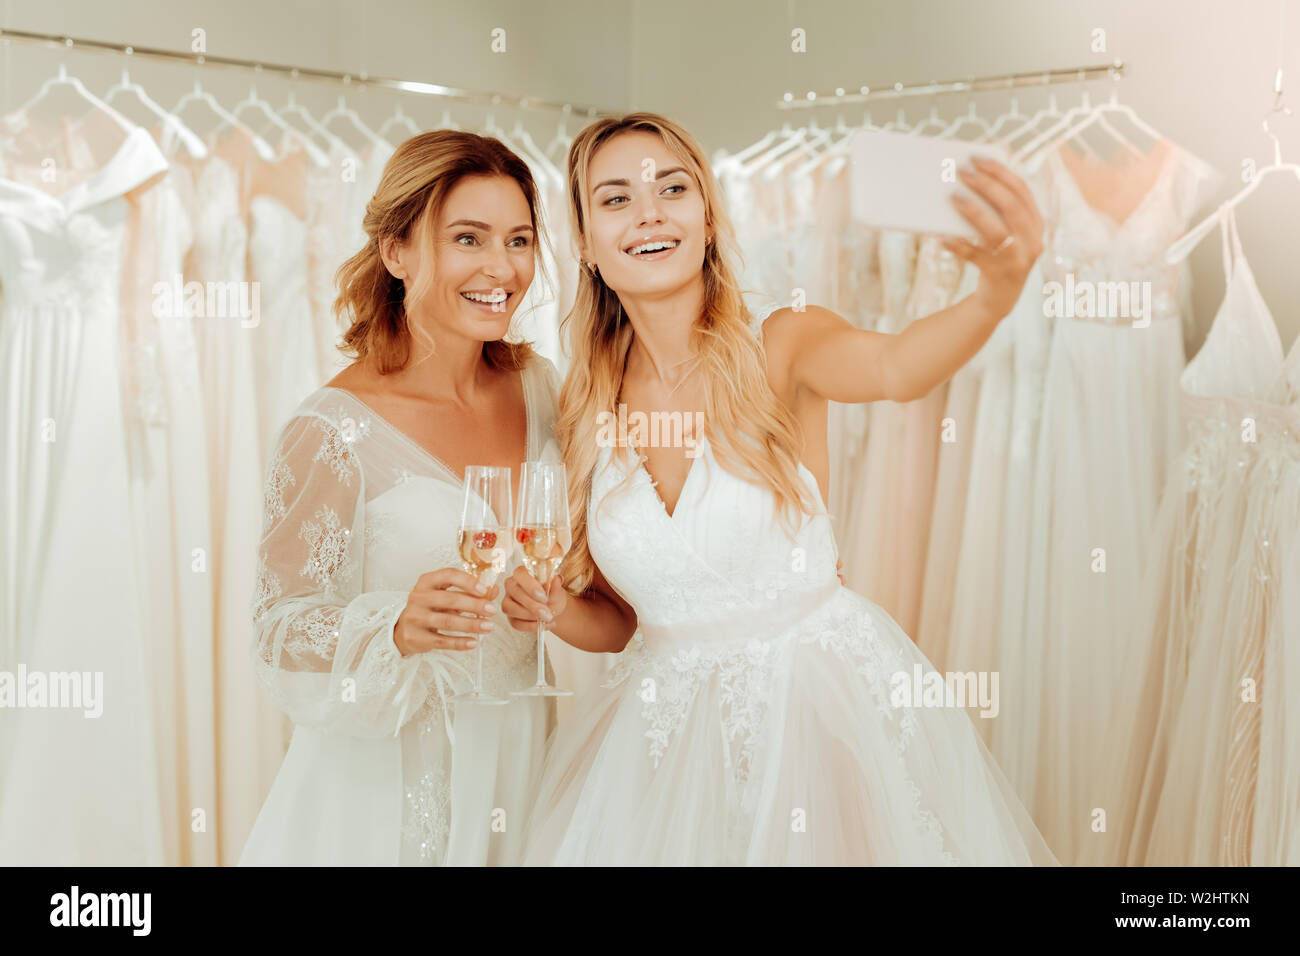 Two happy women taking selfies in wedding dresses. Stock Photo